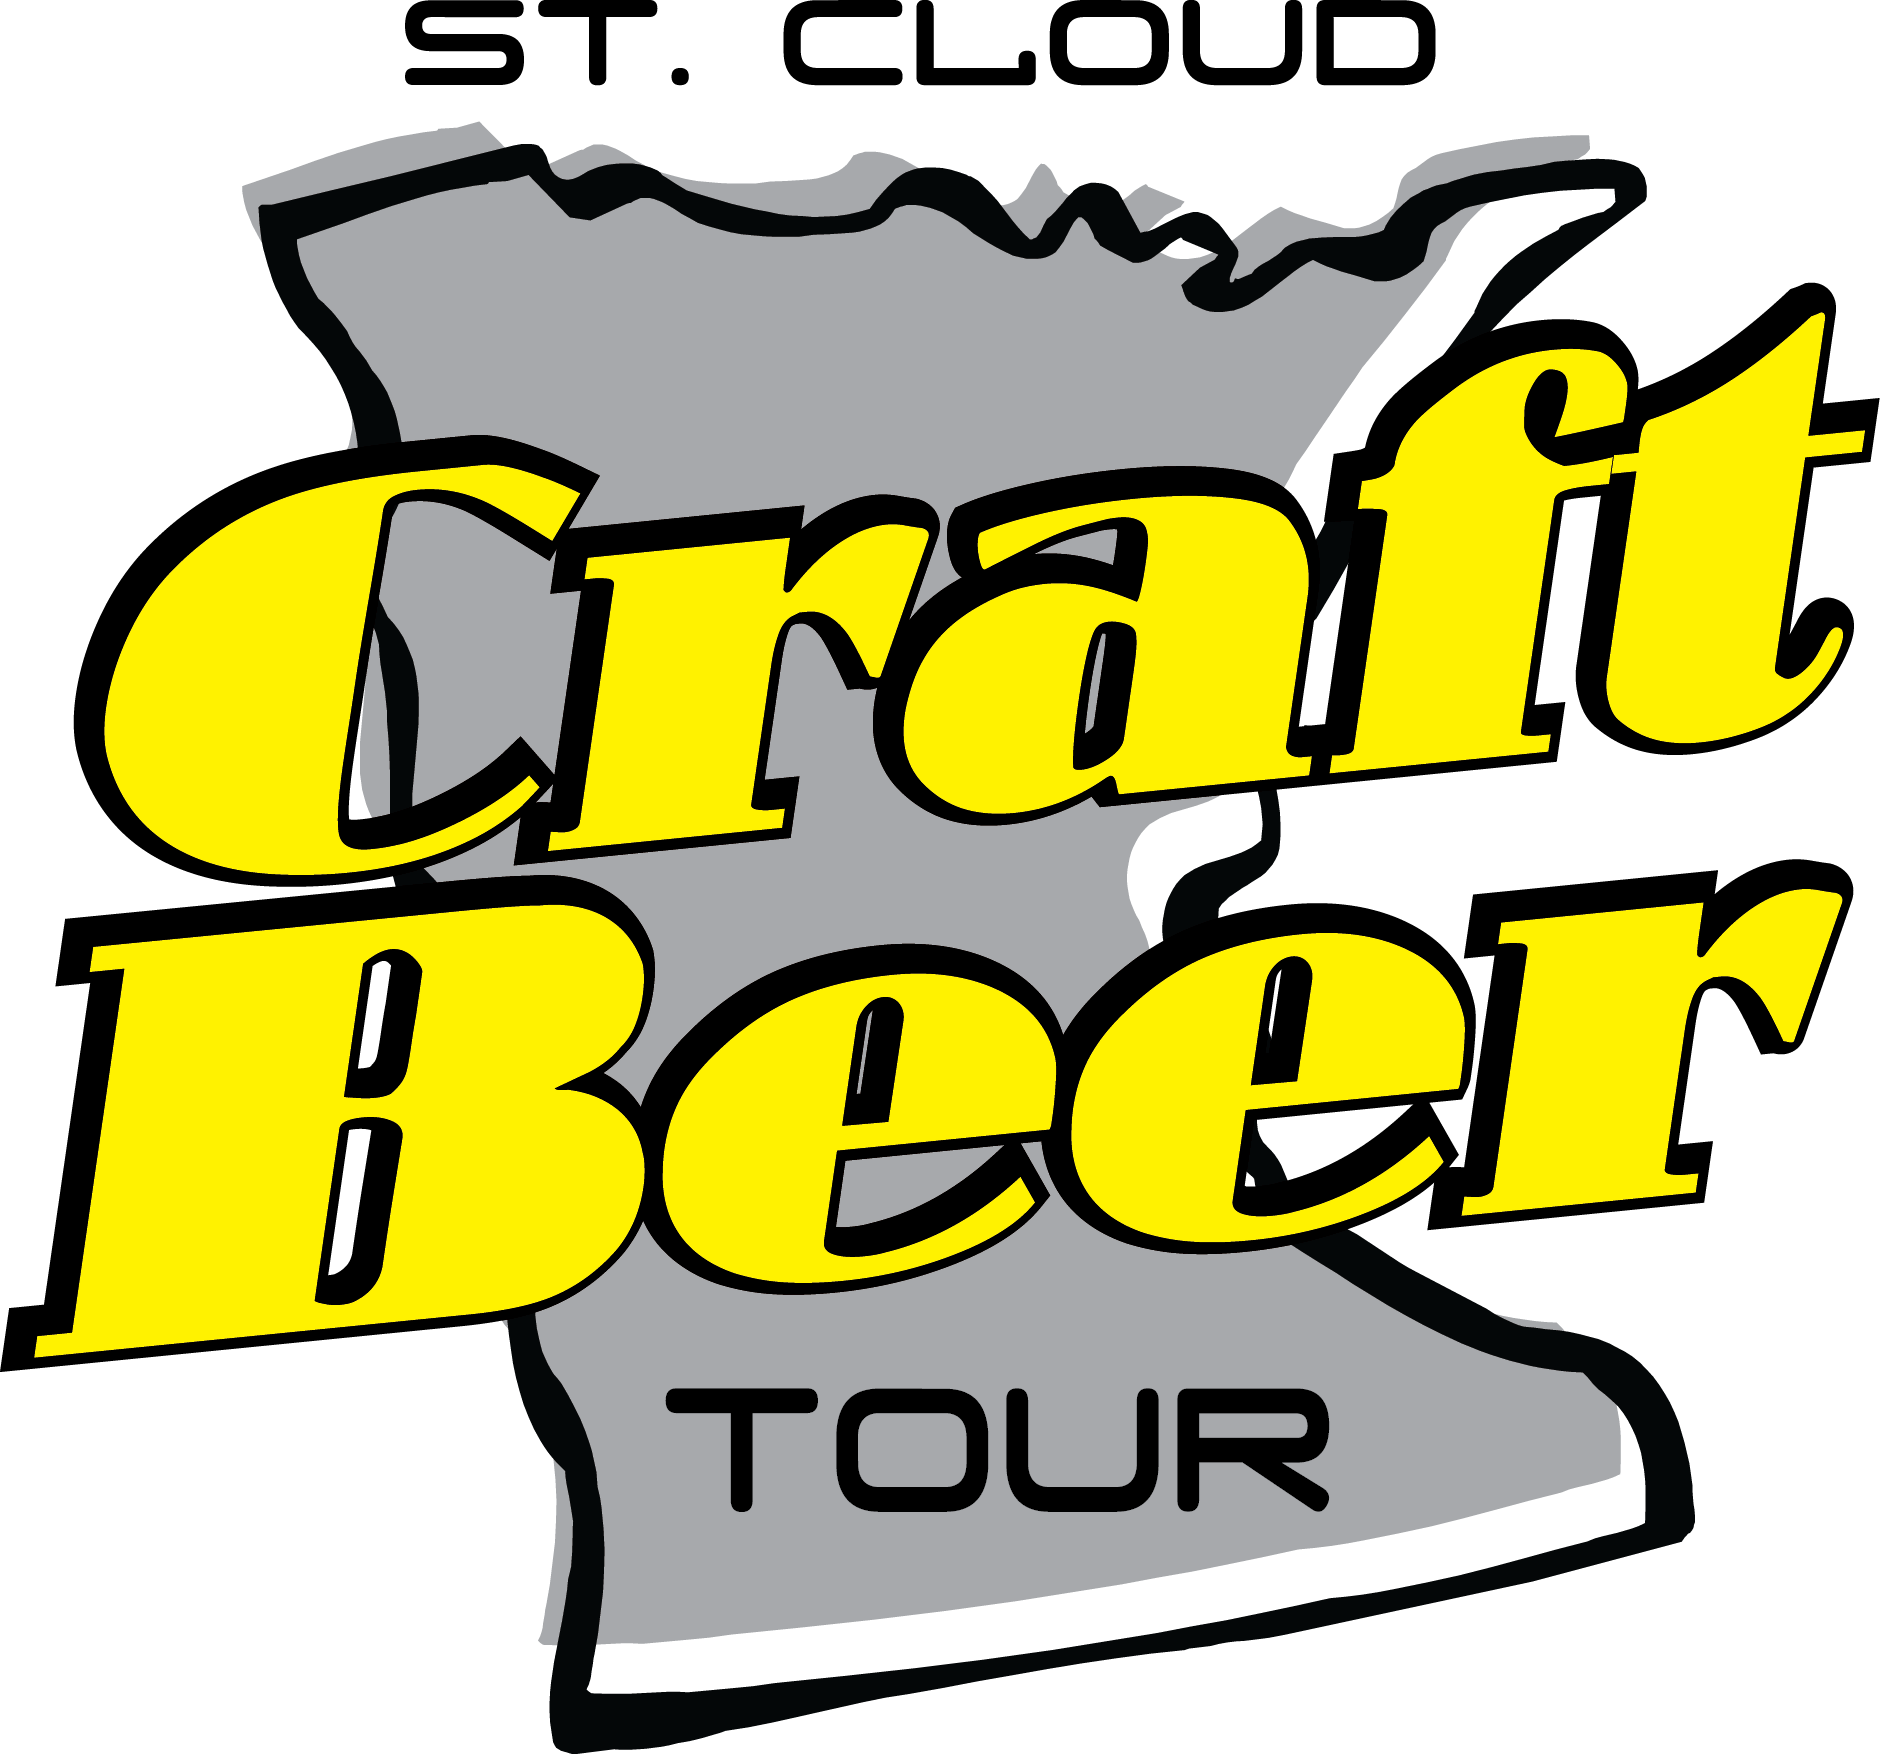 Voyageur At St - St Cloud Craft Beer Tour 2018 (1880x1754)